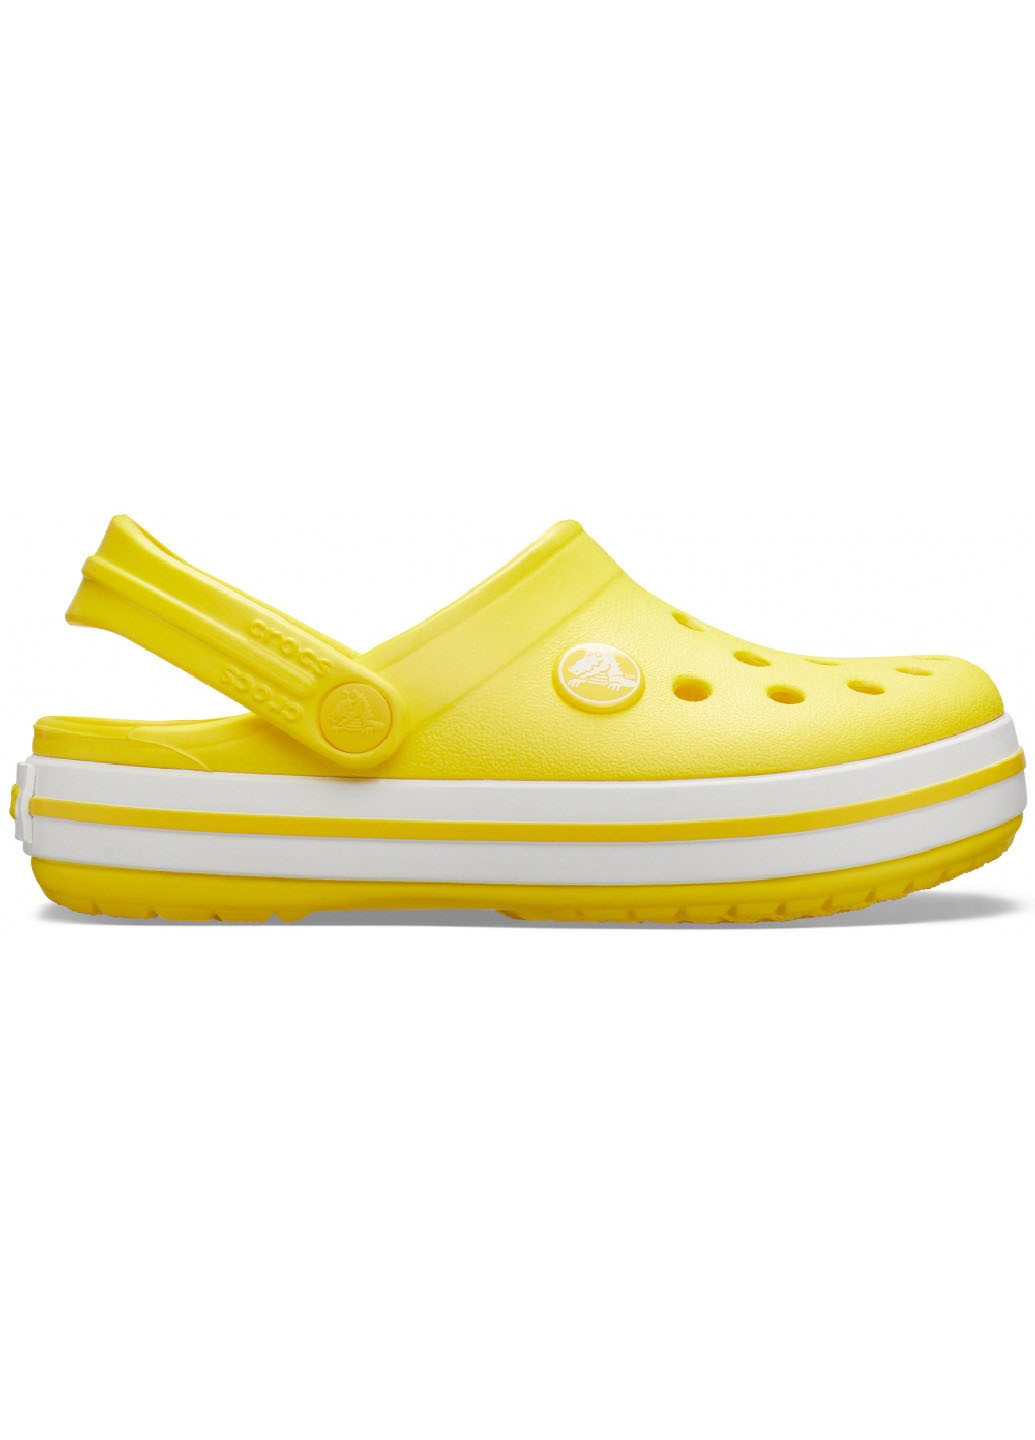 Желтые сабо Crocs